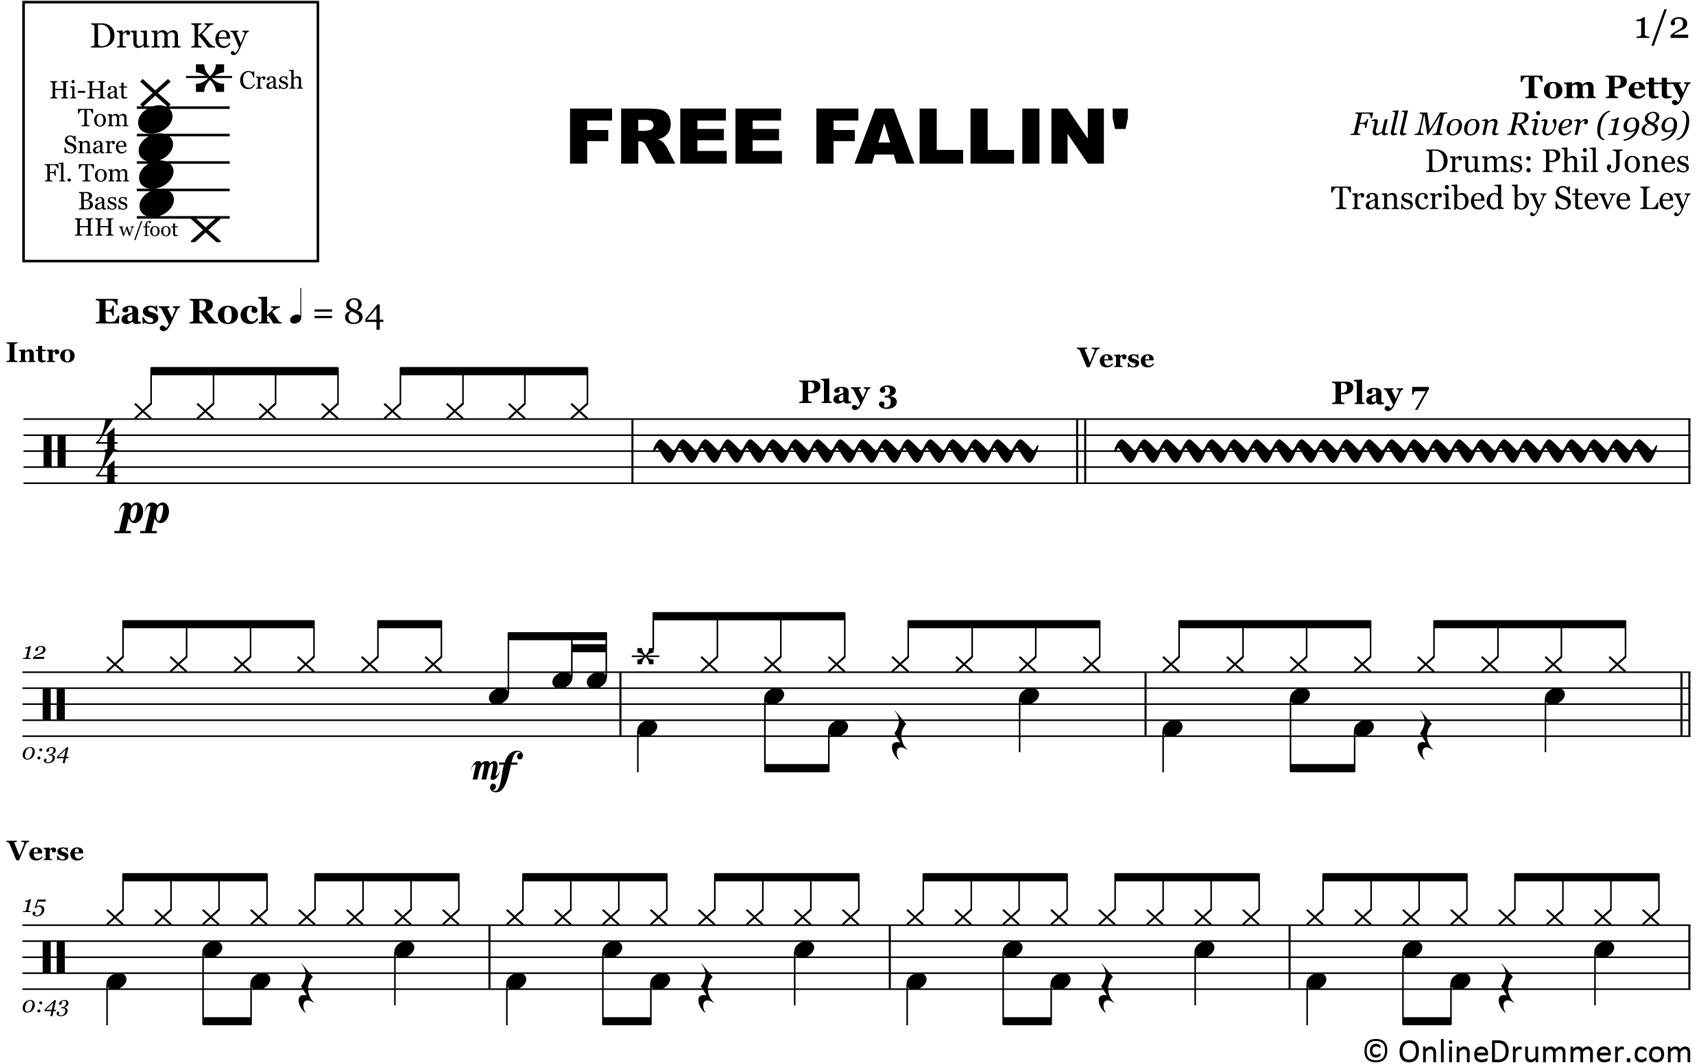 Free Fallin' - Tom Petty - Drum Sheet Music